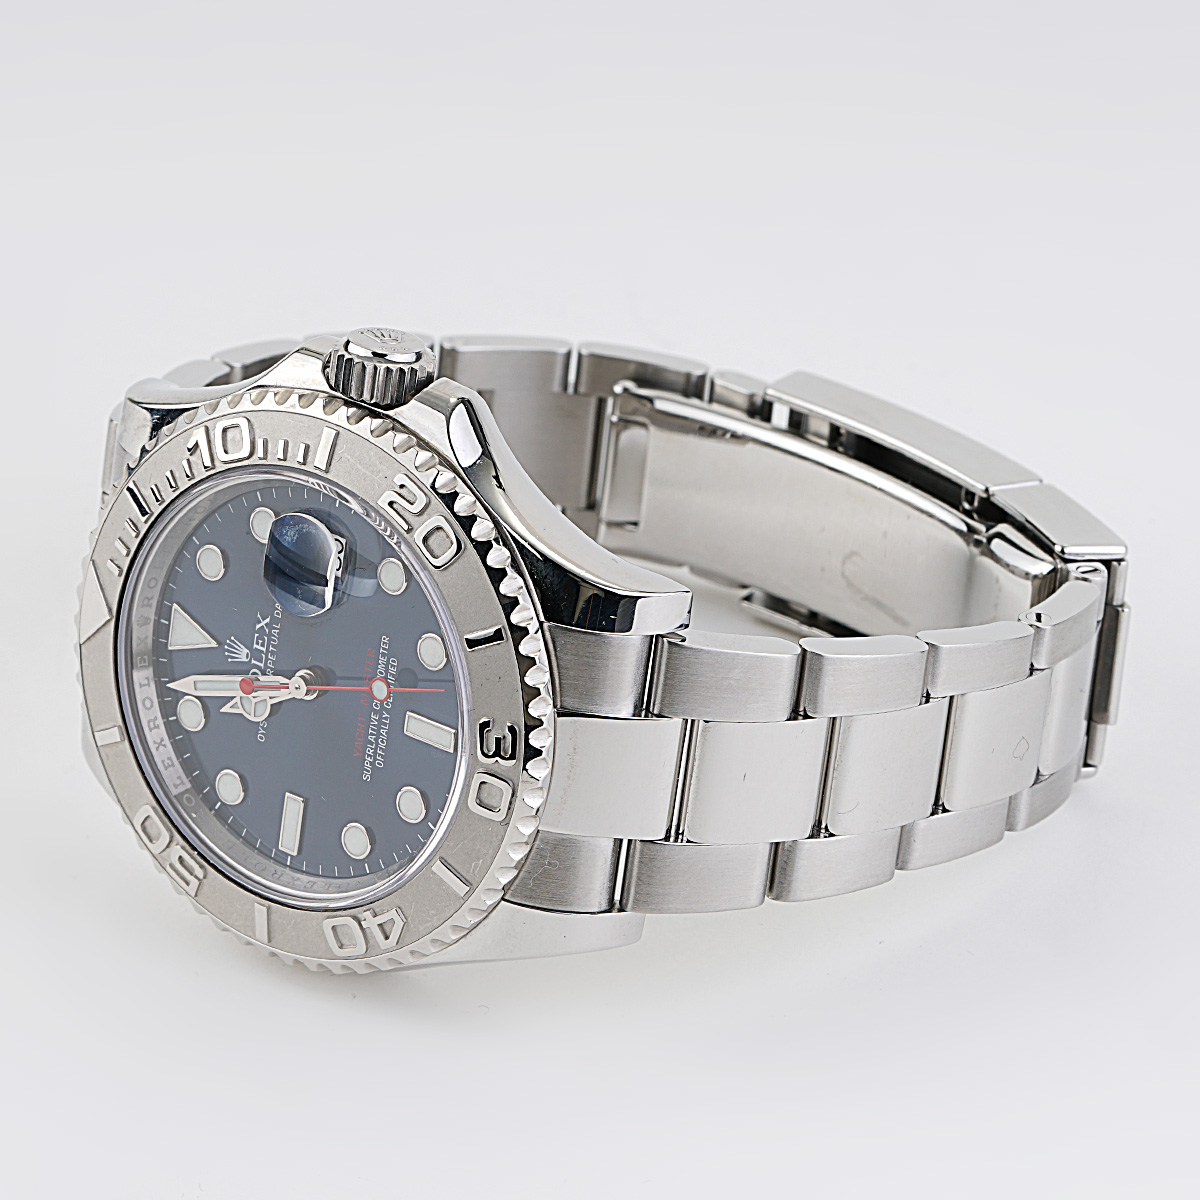 Rolex Yachtmaster (116622) blue dial, 40mm, platinum bezel